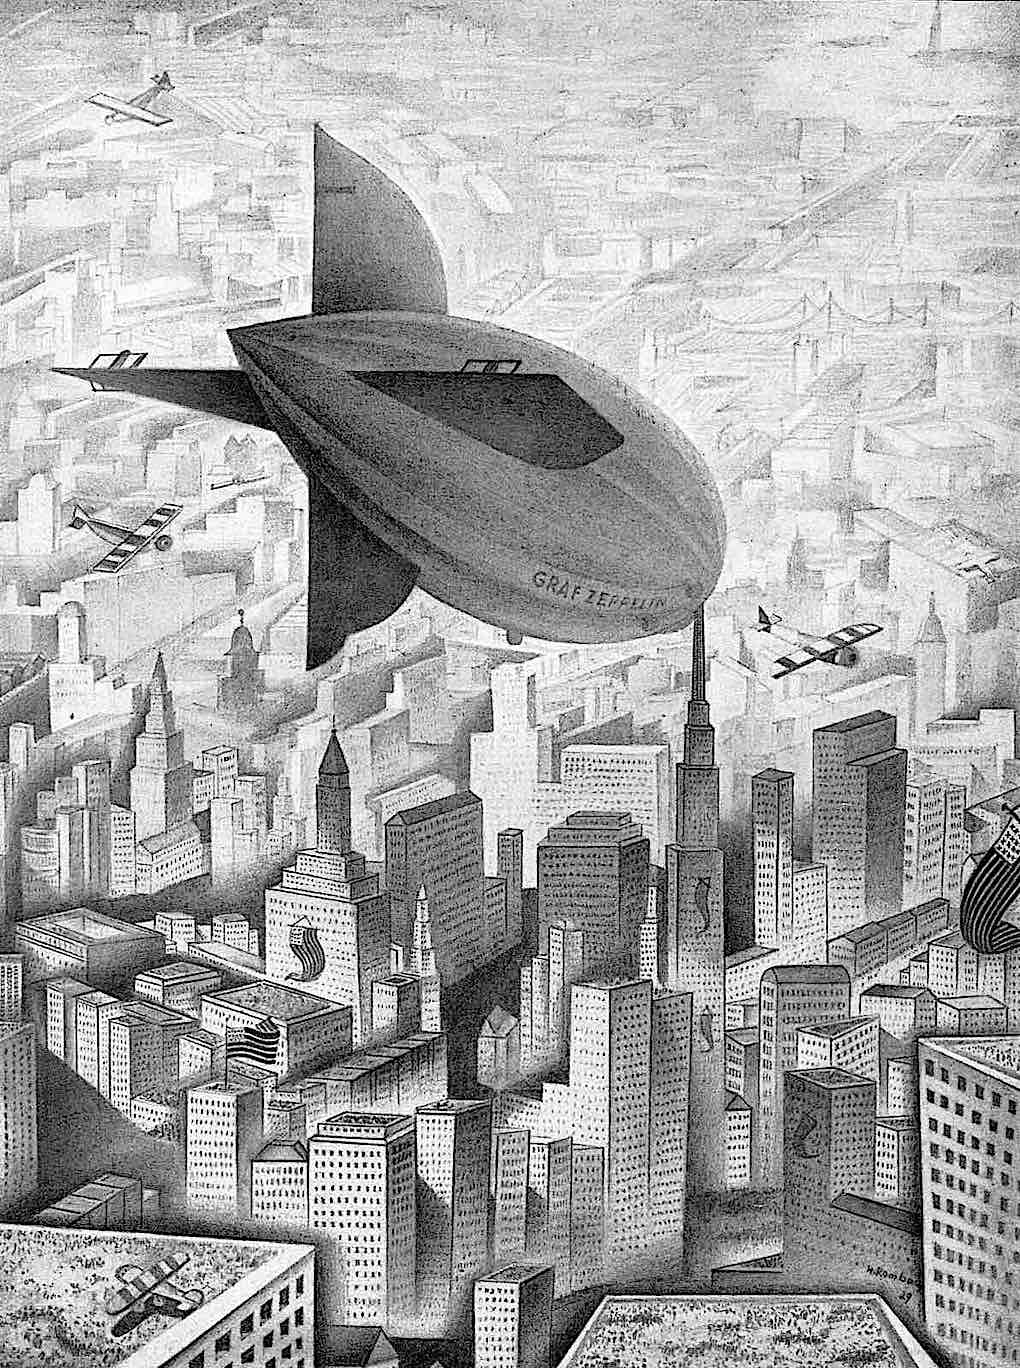 a 1929 dirigible over a city